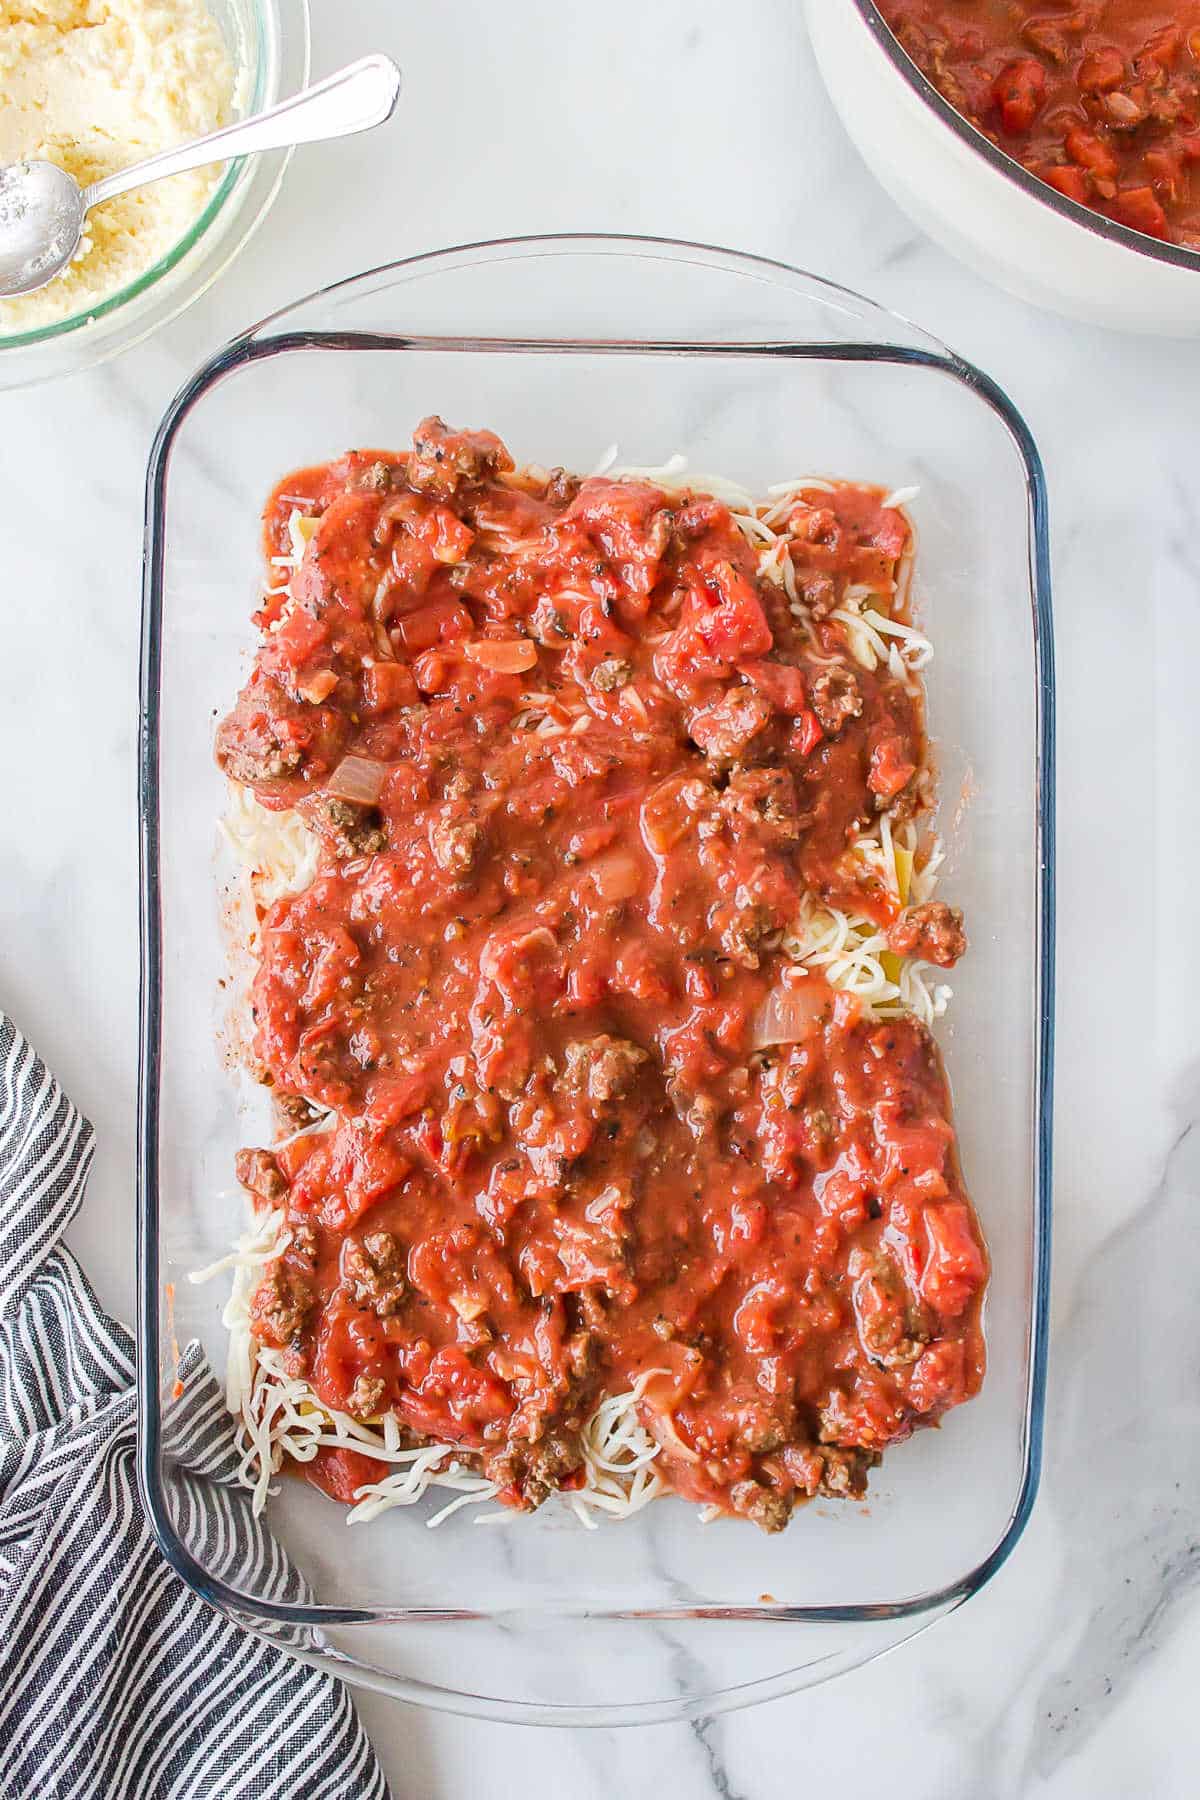 Red sauce over lasagna noodles. 